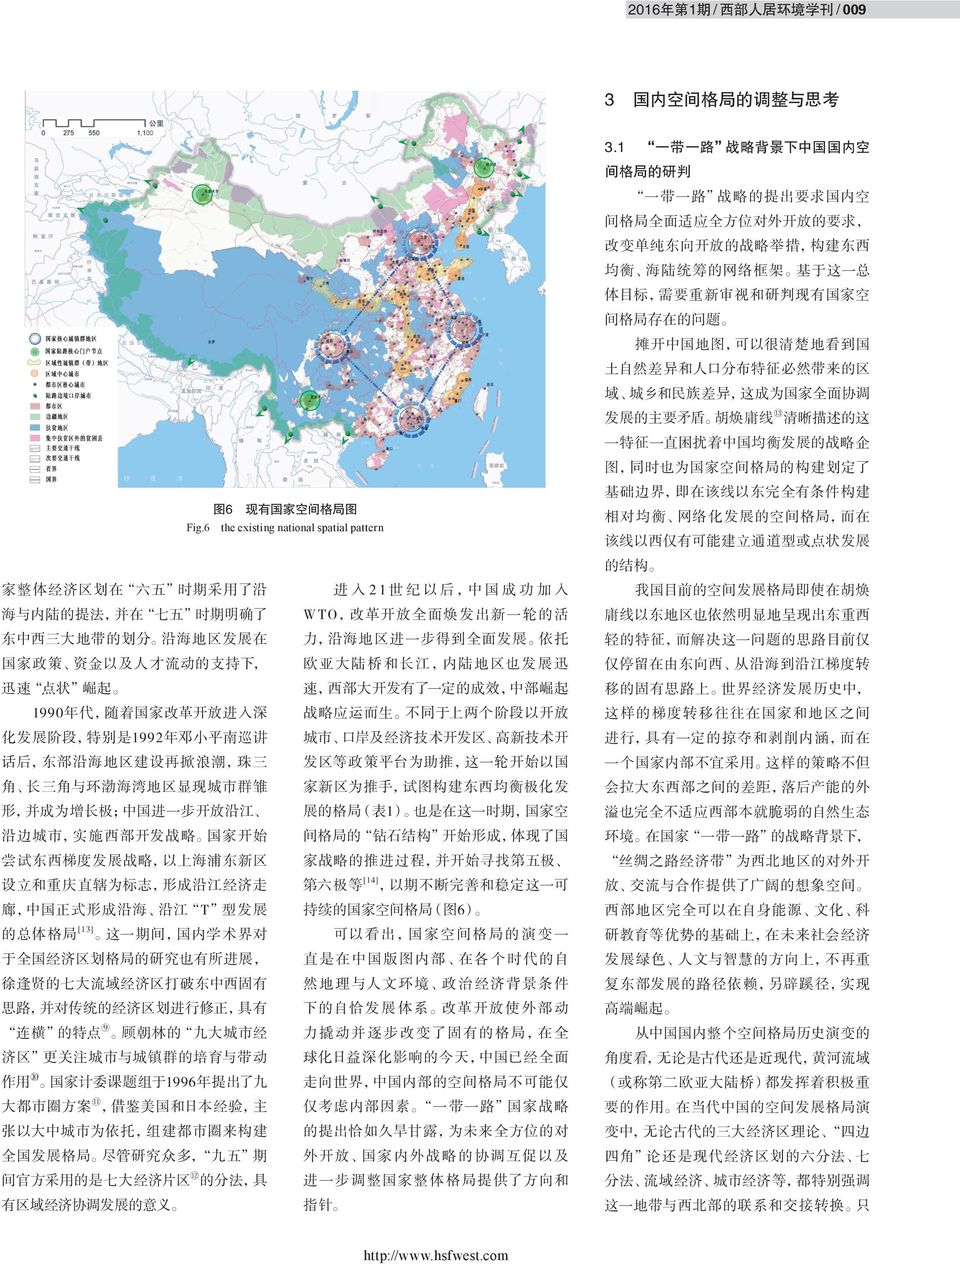 m清晰描述的这 一特征一直困扰着中国均衡发展的战略企 图 同时也为国家空间格局的构建 划定了 基础边界 即在该线以东完全有条件构建 图6 现有国家空间格局图 Fig.